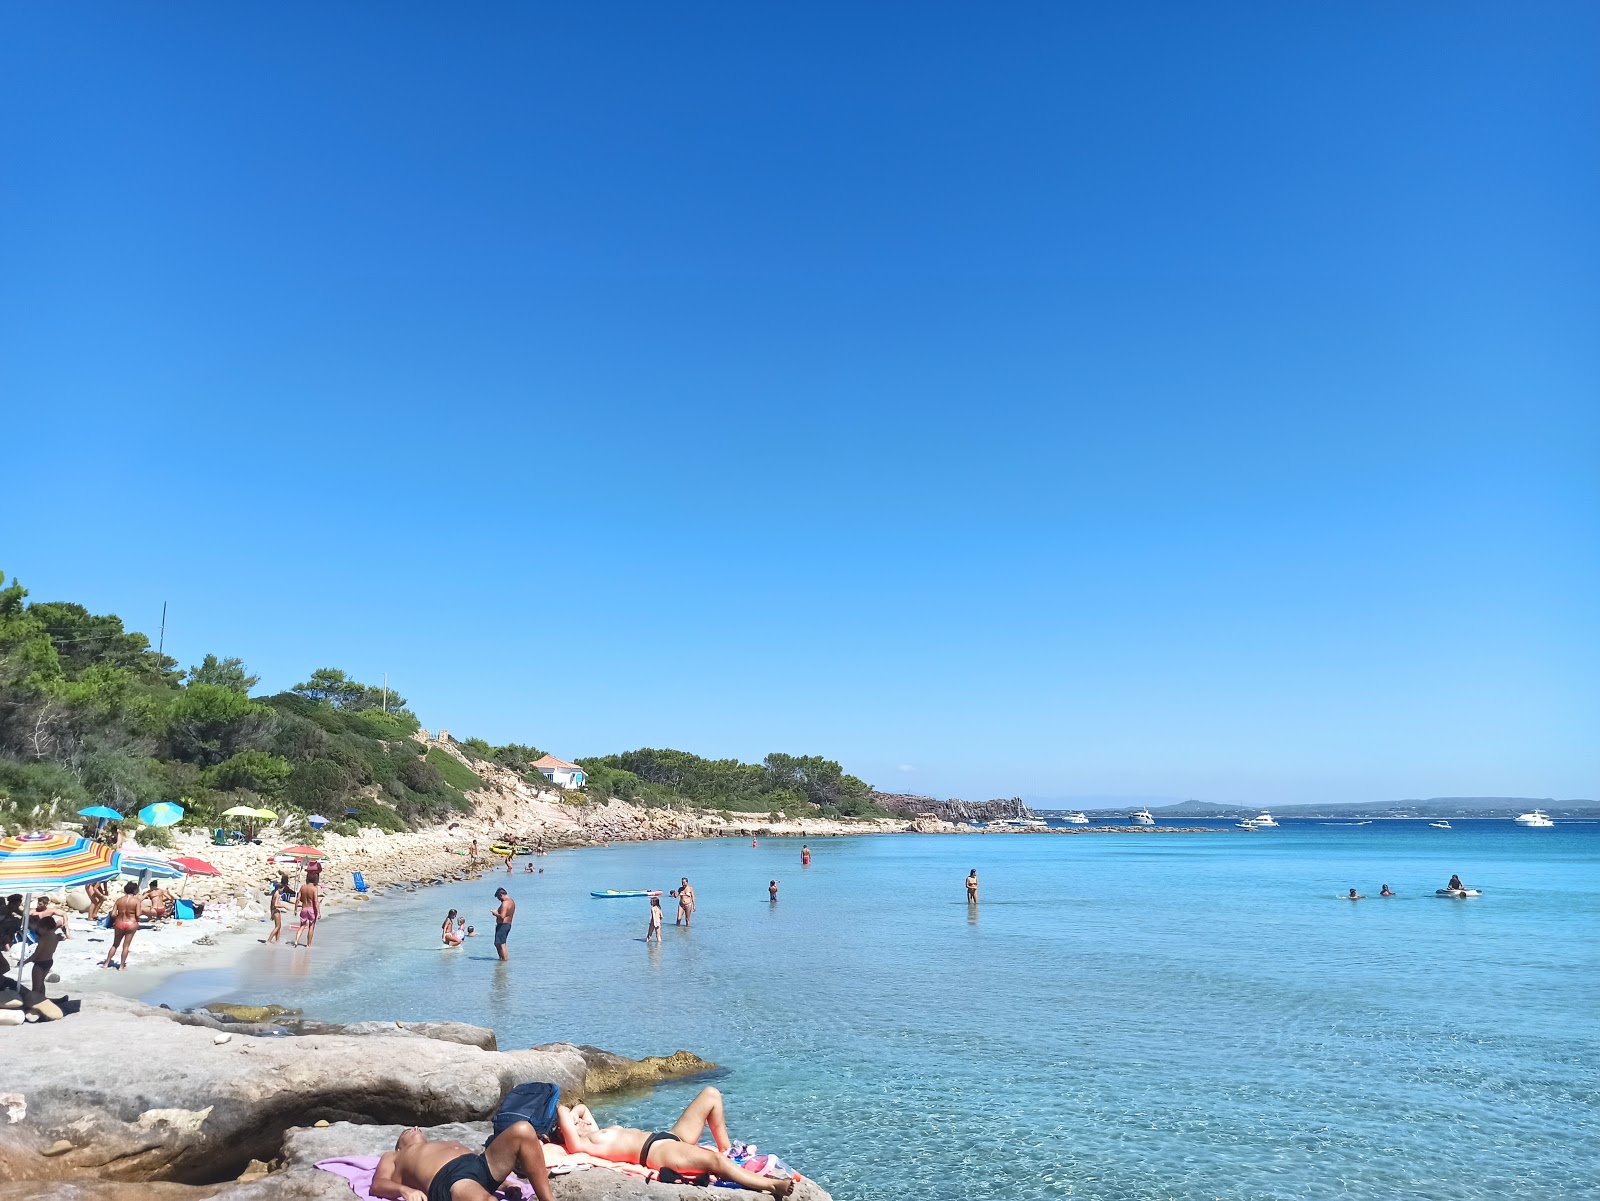 Foto de Guidi beach - lugar popular entre os apreciadores de relaxamento